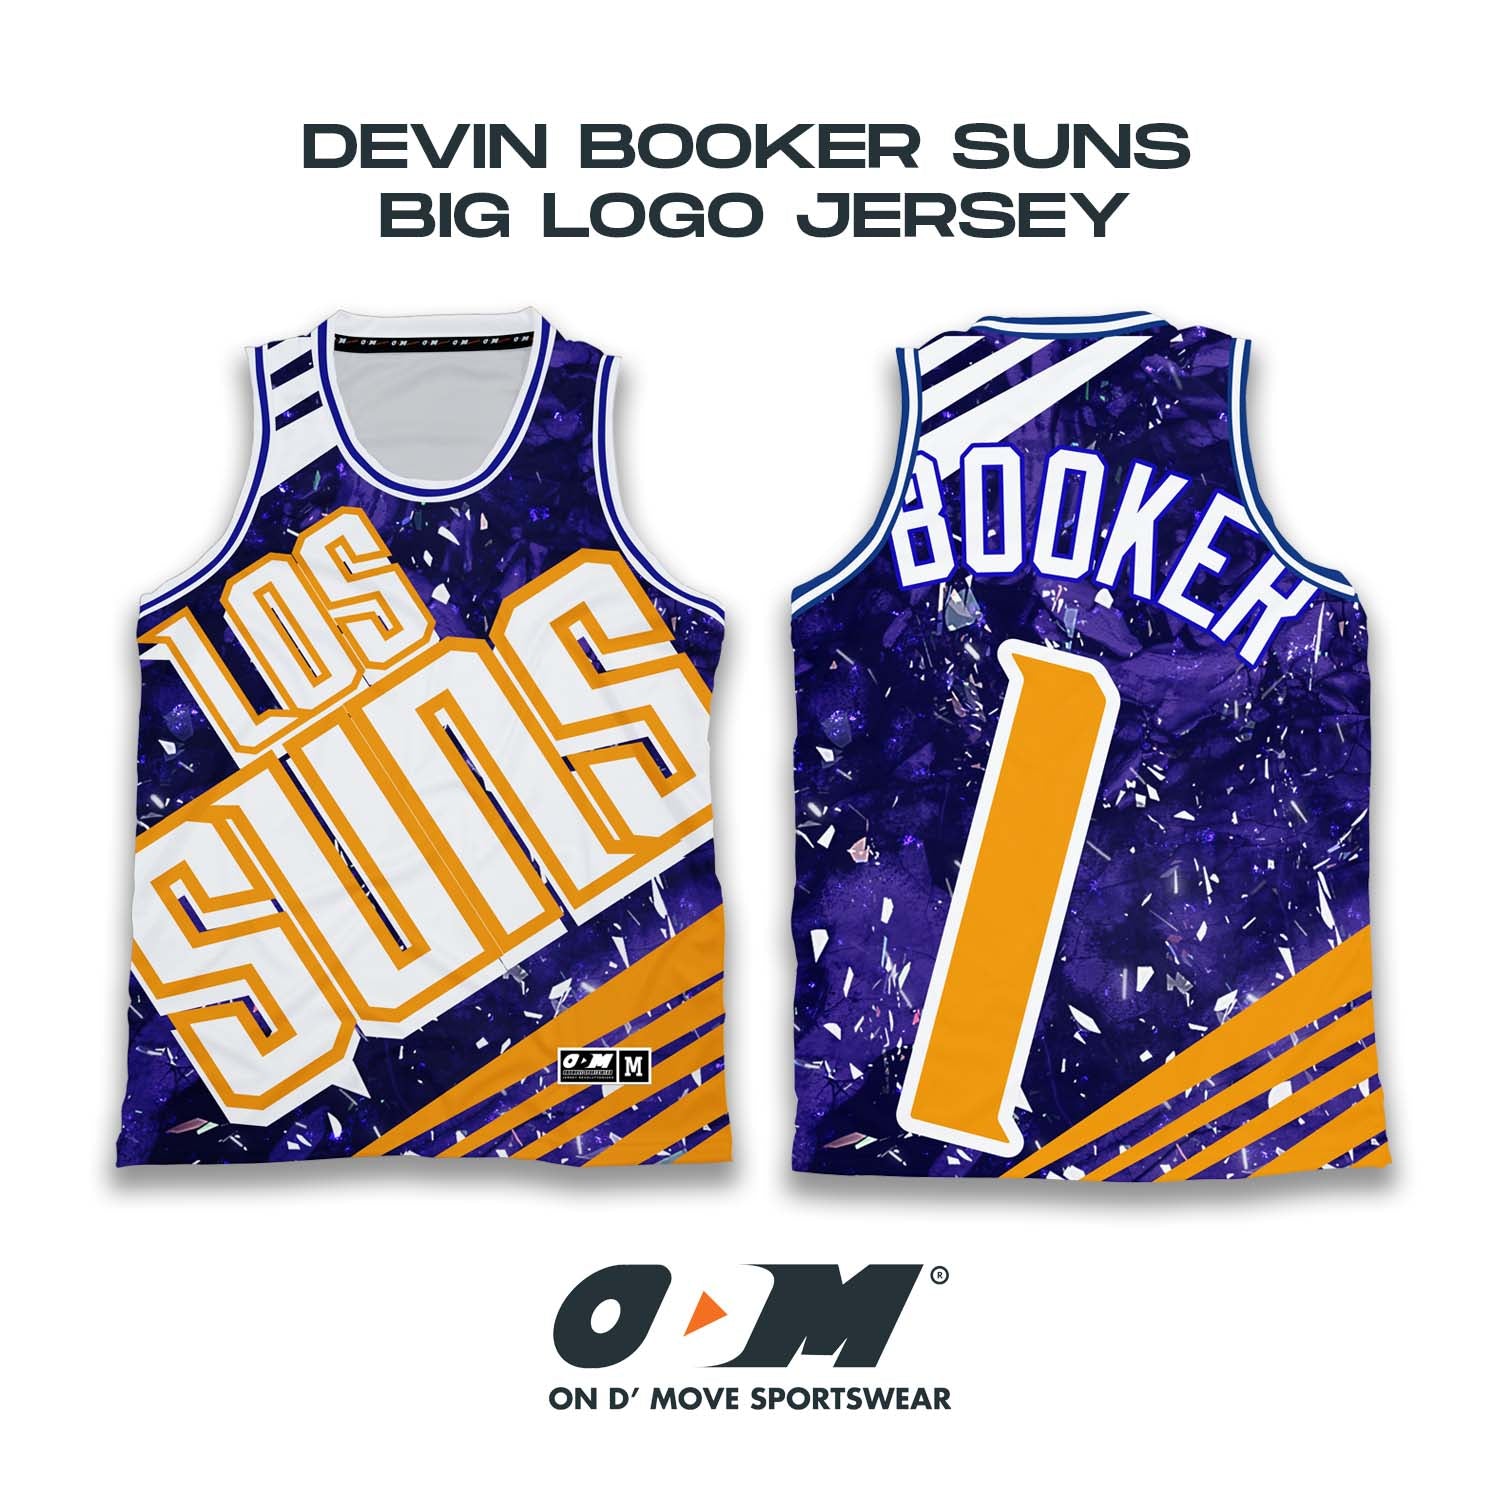 Devin Booker Suns Big Logo Jersey